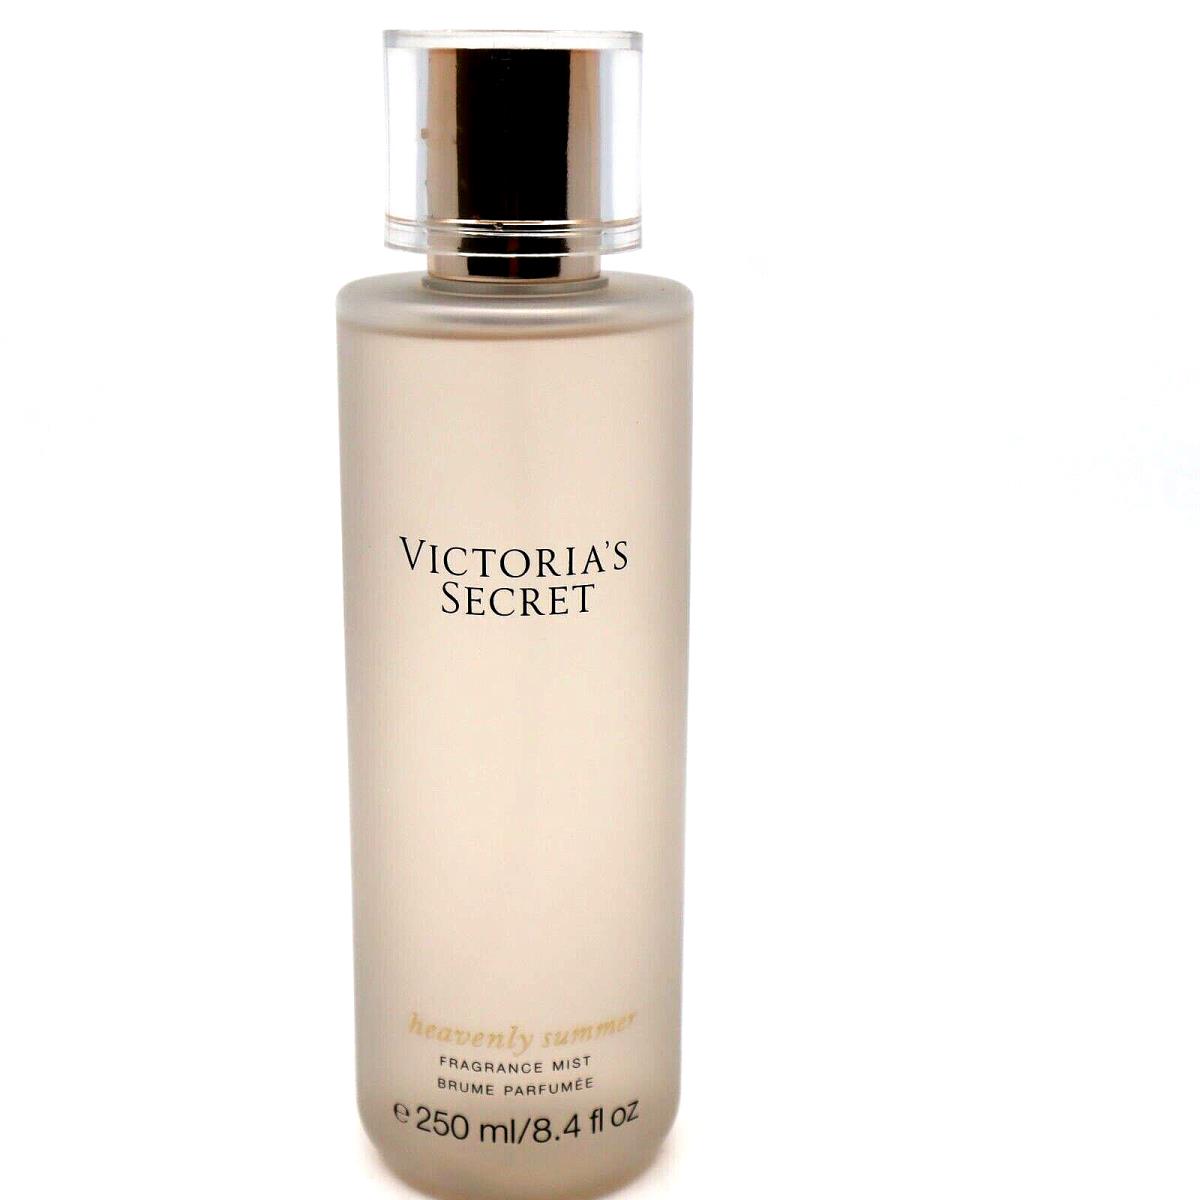 Victorias Secret Heavenly Summer Fragrance Body Mist Spray 8.4